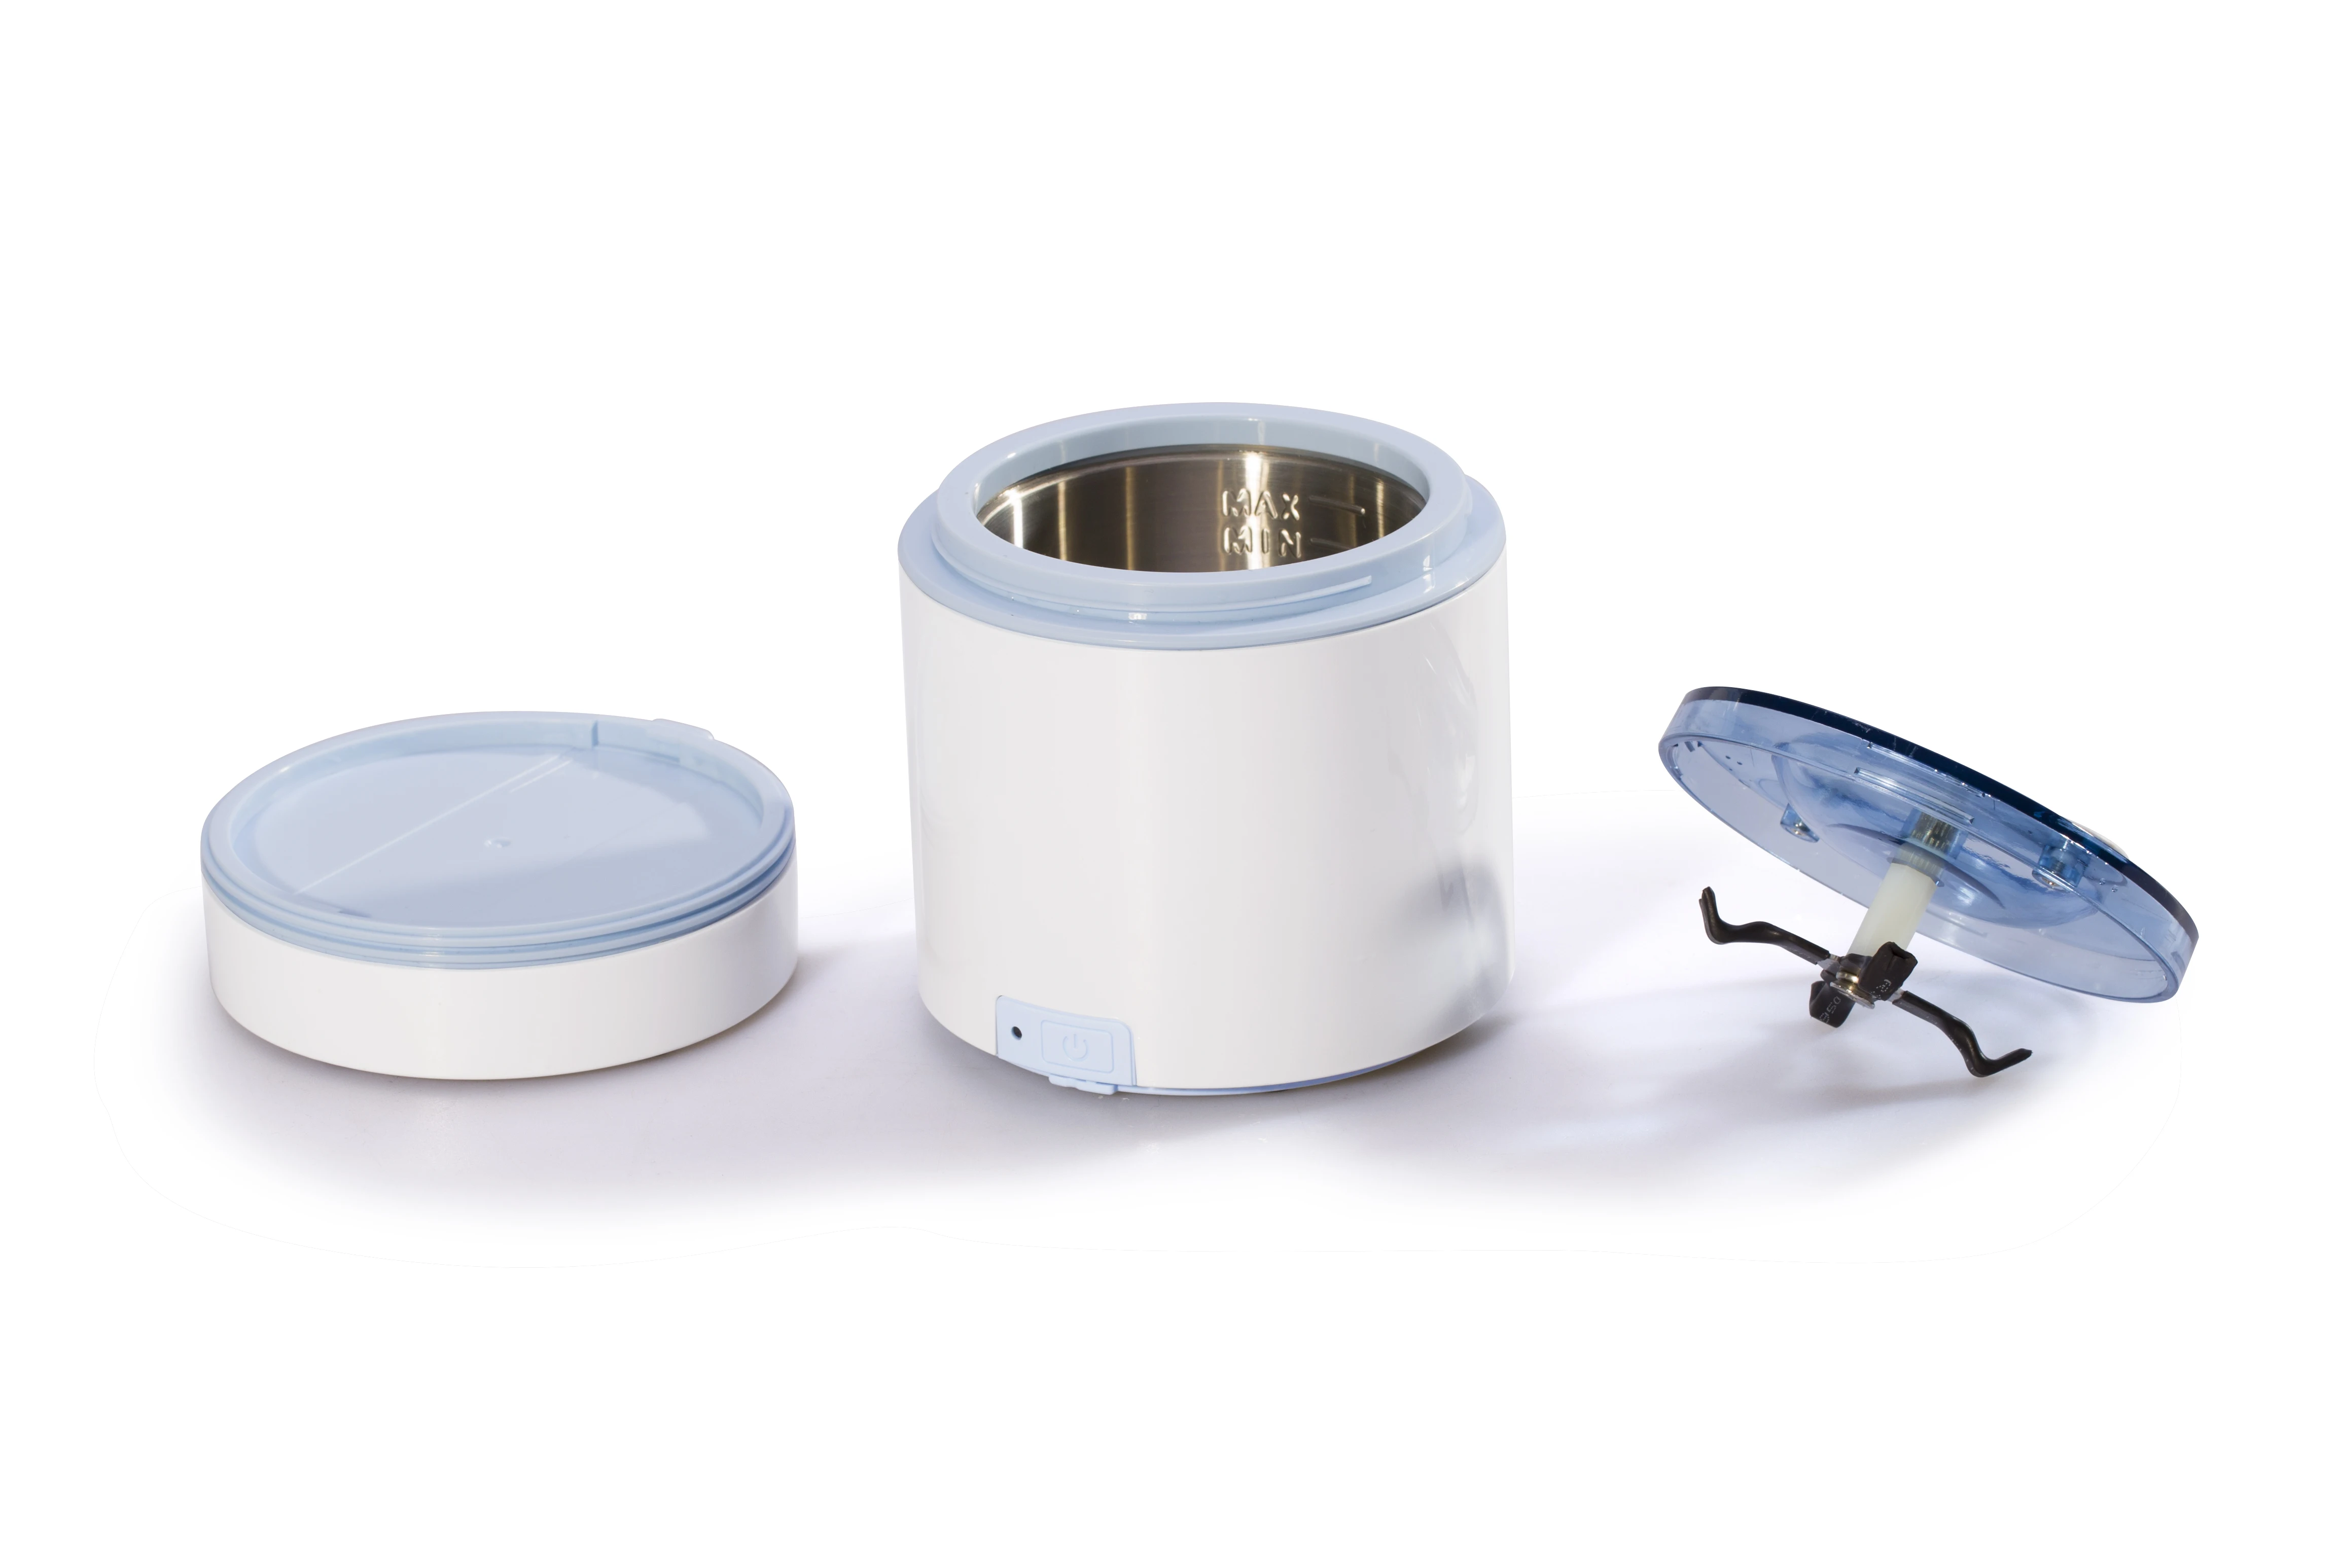 Mini size detachable auto-timer denture jewelry ultrasonic cleaner